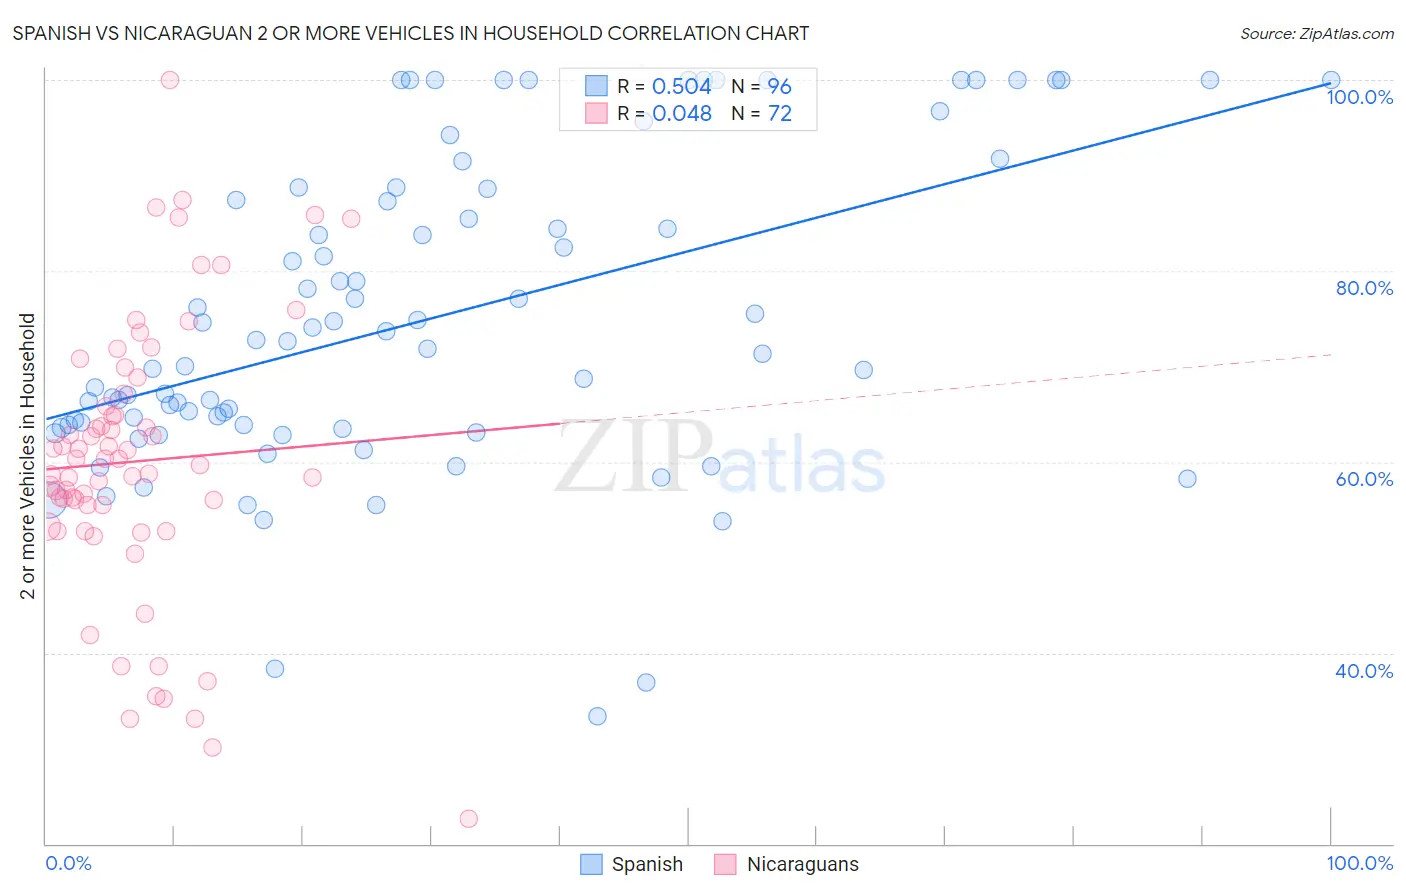 Spanish vs Nicaraguan 2 or more Vehicles in Household